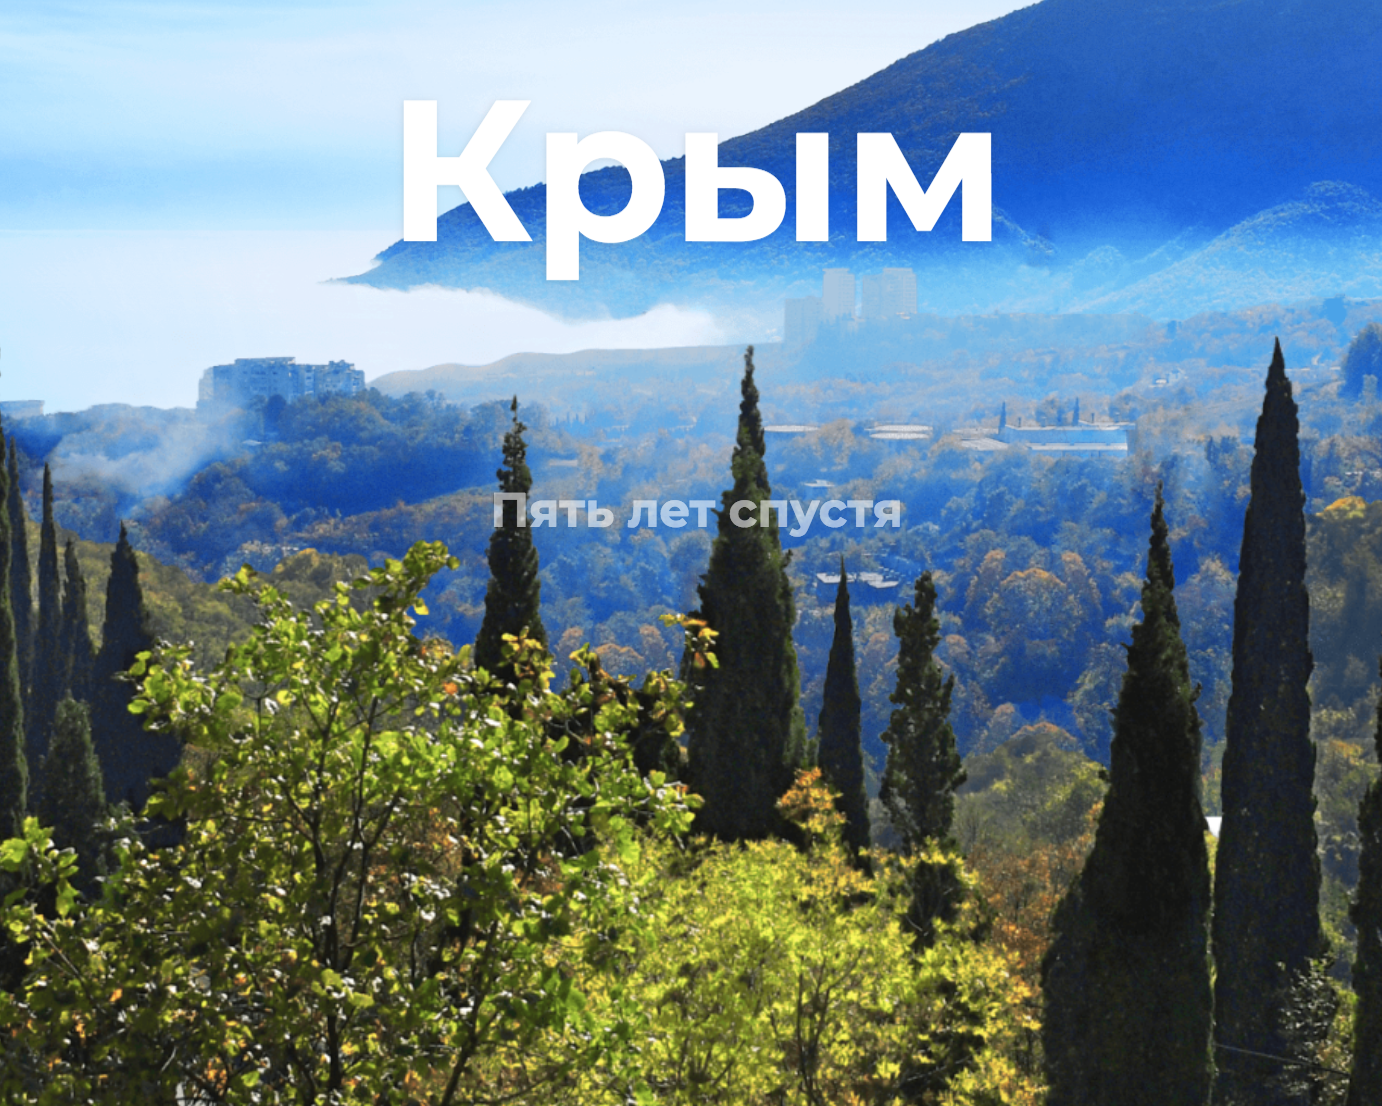 Crimea five years later (RIA Novosti infographic) - Crimea is ours, Crimean bridge, Wine, Tourism, Kerch Strait, Tavrida highway, , Infographics, Longpost